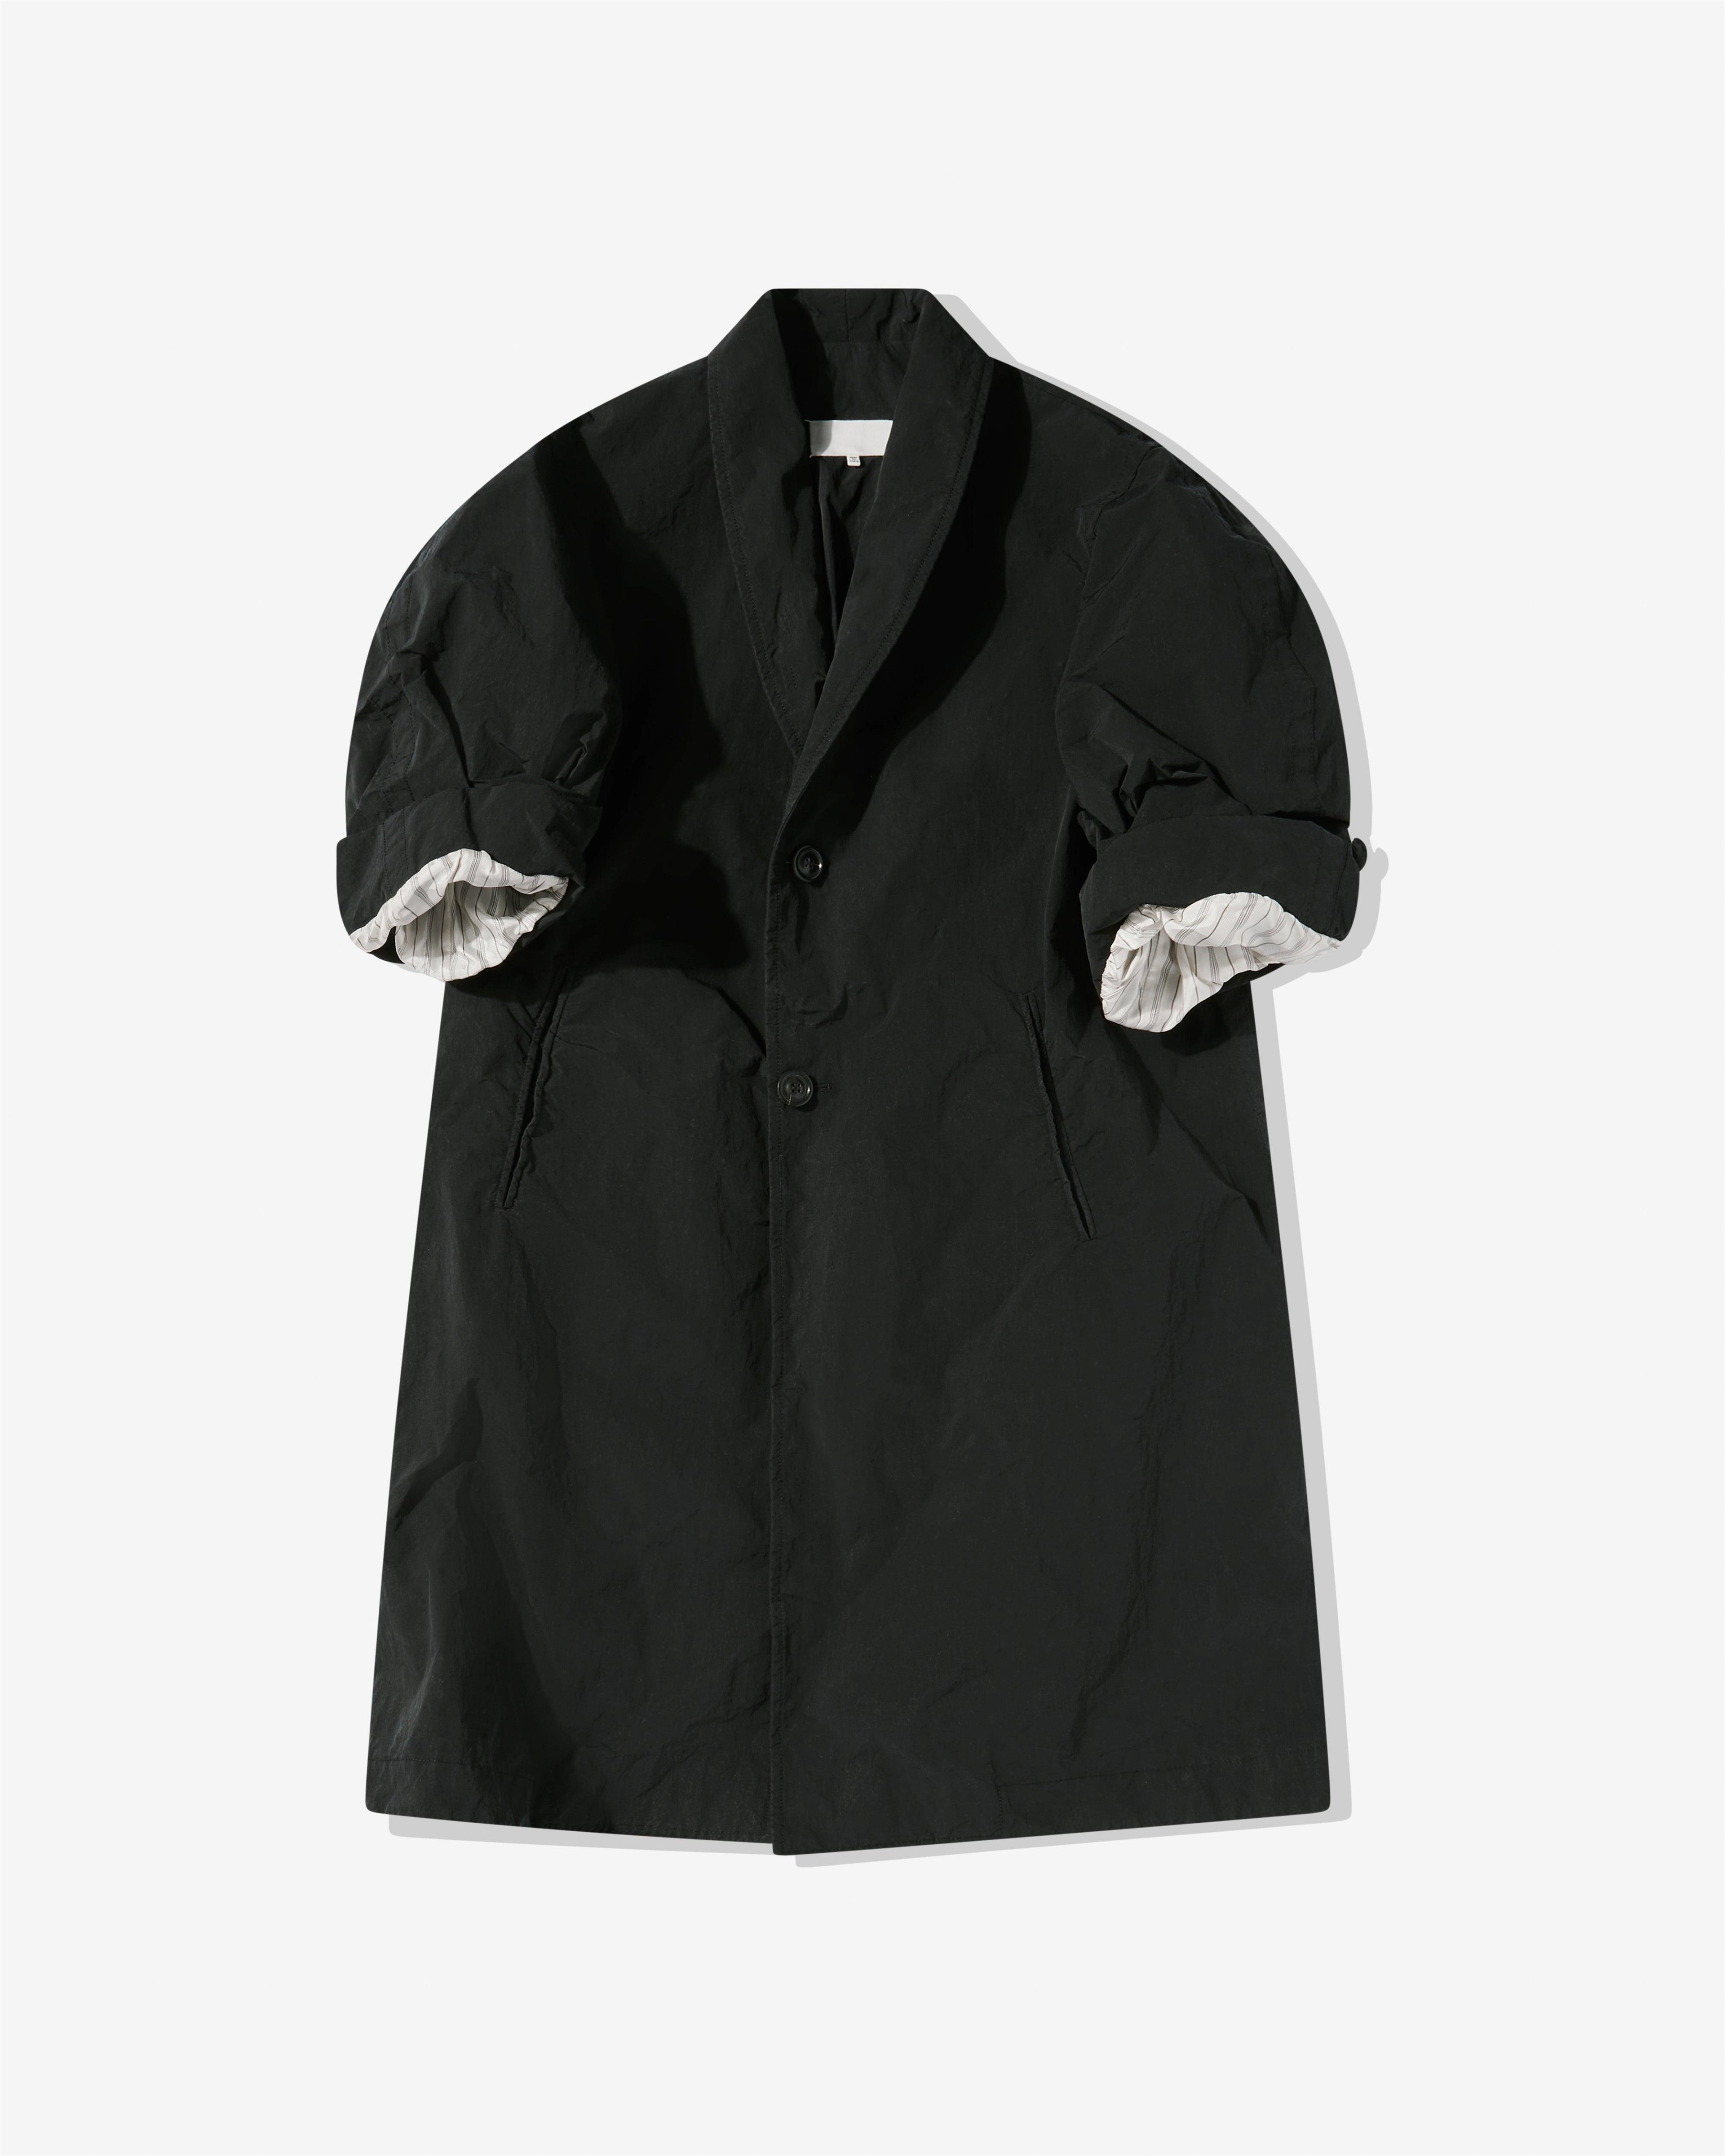 Maison Margiela - Women's Tailored Coat - (Black) by MAISON MARGIELA